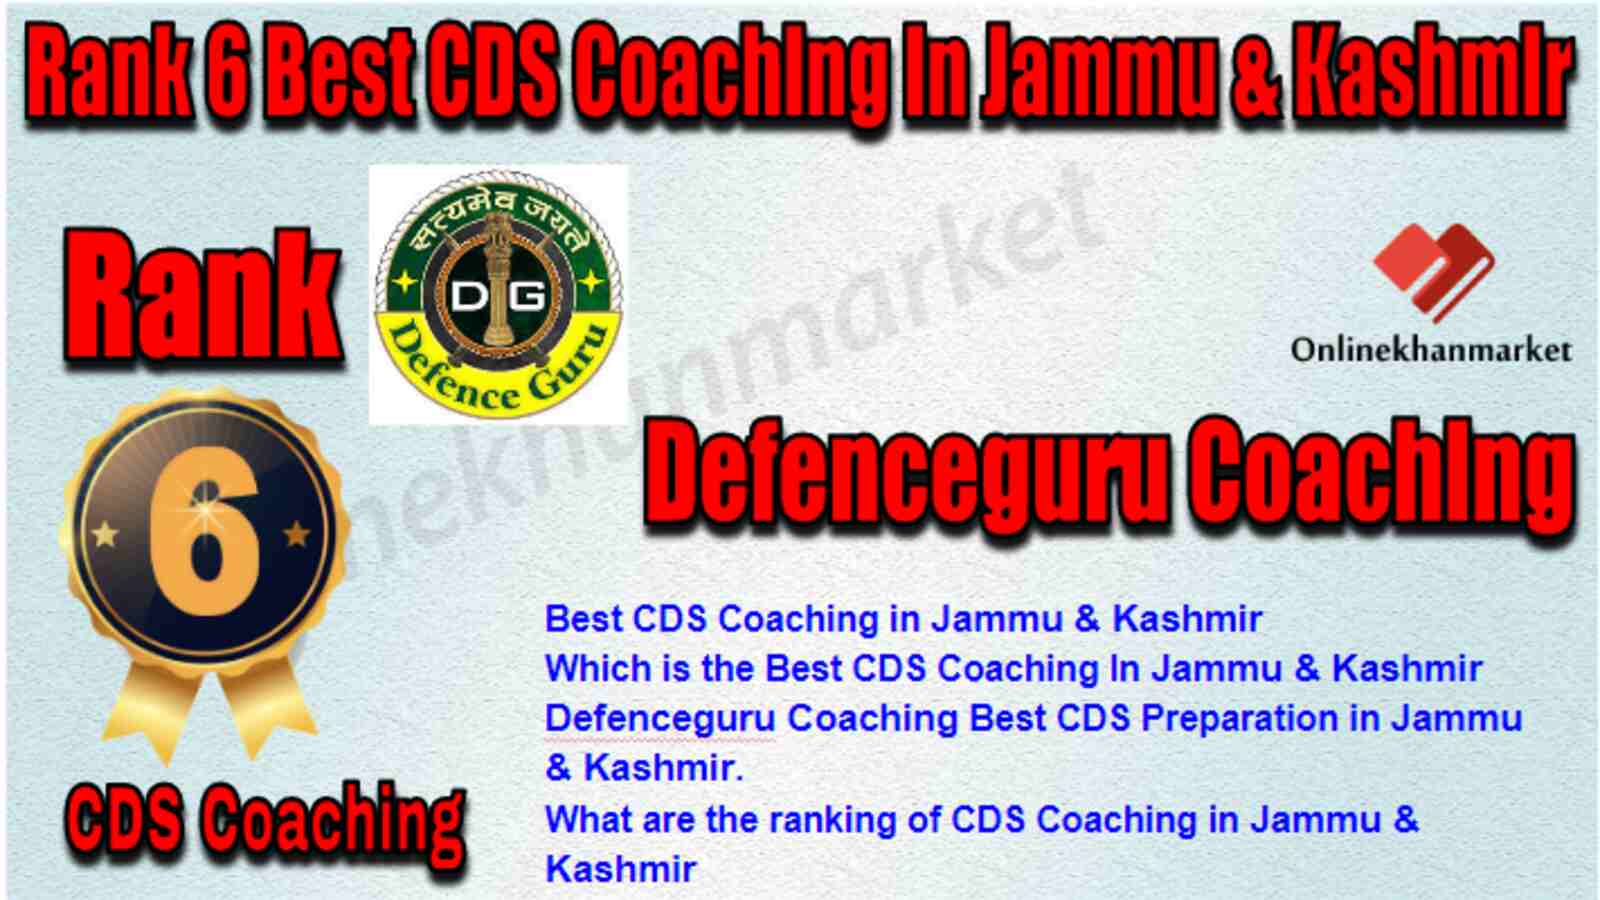 Rank 6 Best CDS Coaching in Jammu & Kashmir